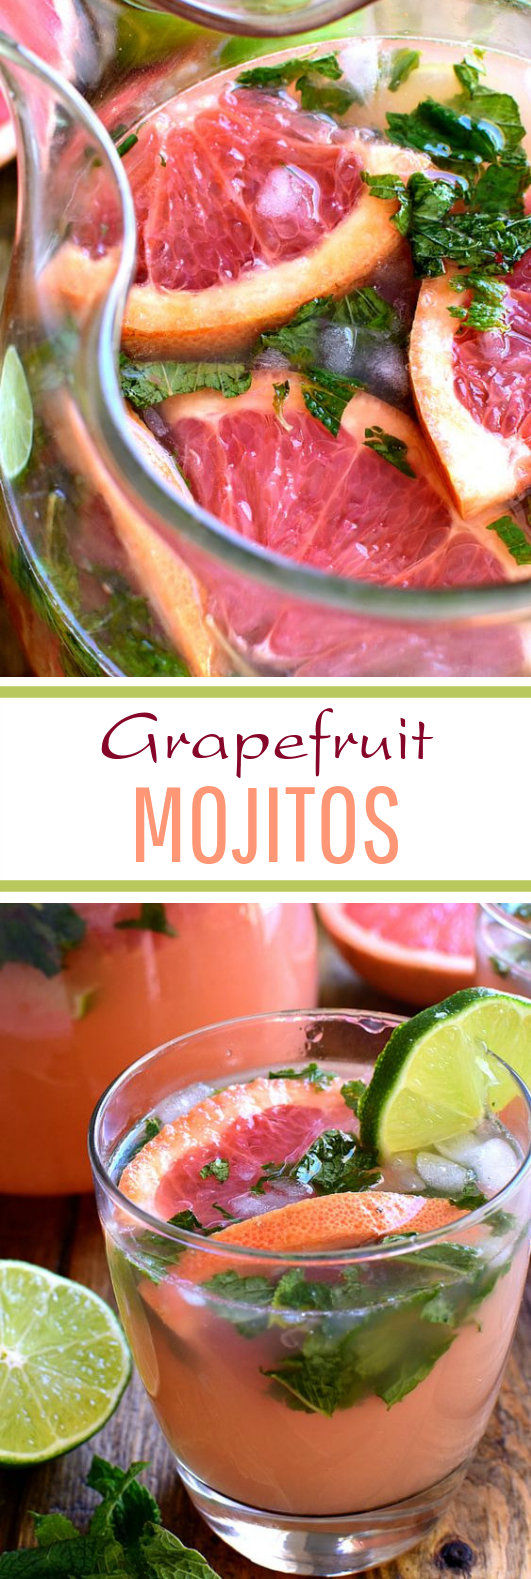 Grapefruit Mojitos #summer #drink